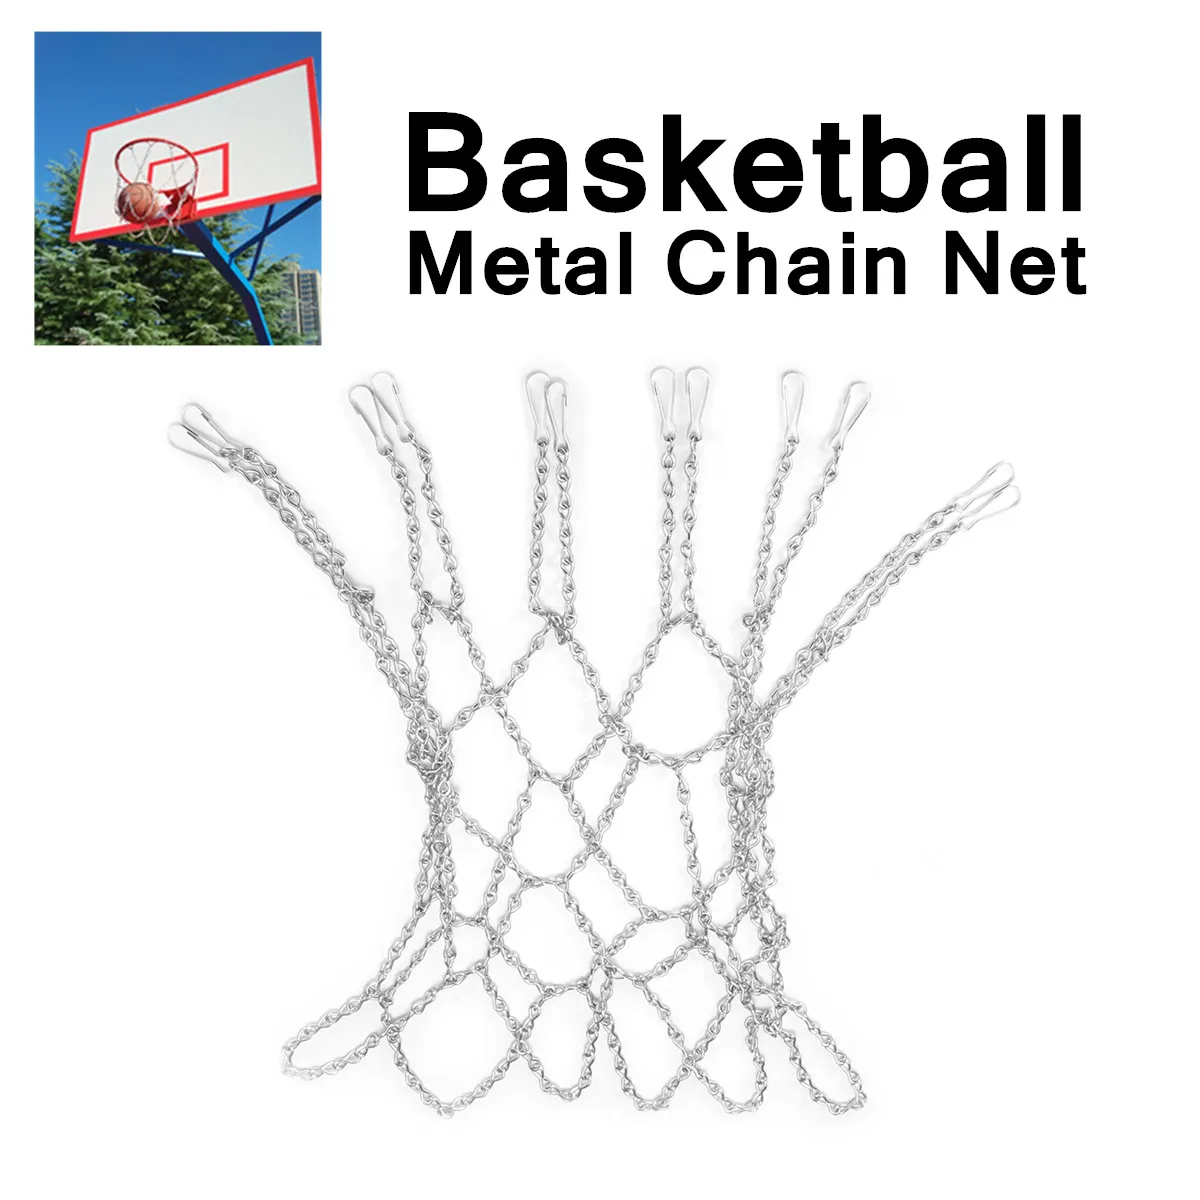 Košarkaški Metalne Lančane prepleta izdvajanje cinka postali 12 Petlje Srebrna Klin, Dizajn Standardna sadnja Za Obruča Jednostavan nosač je Težak- Slika 1